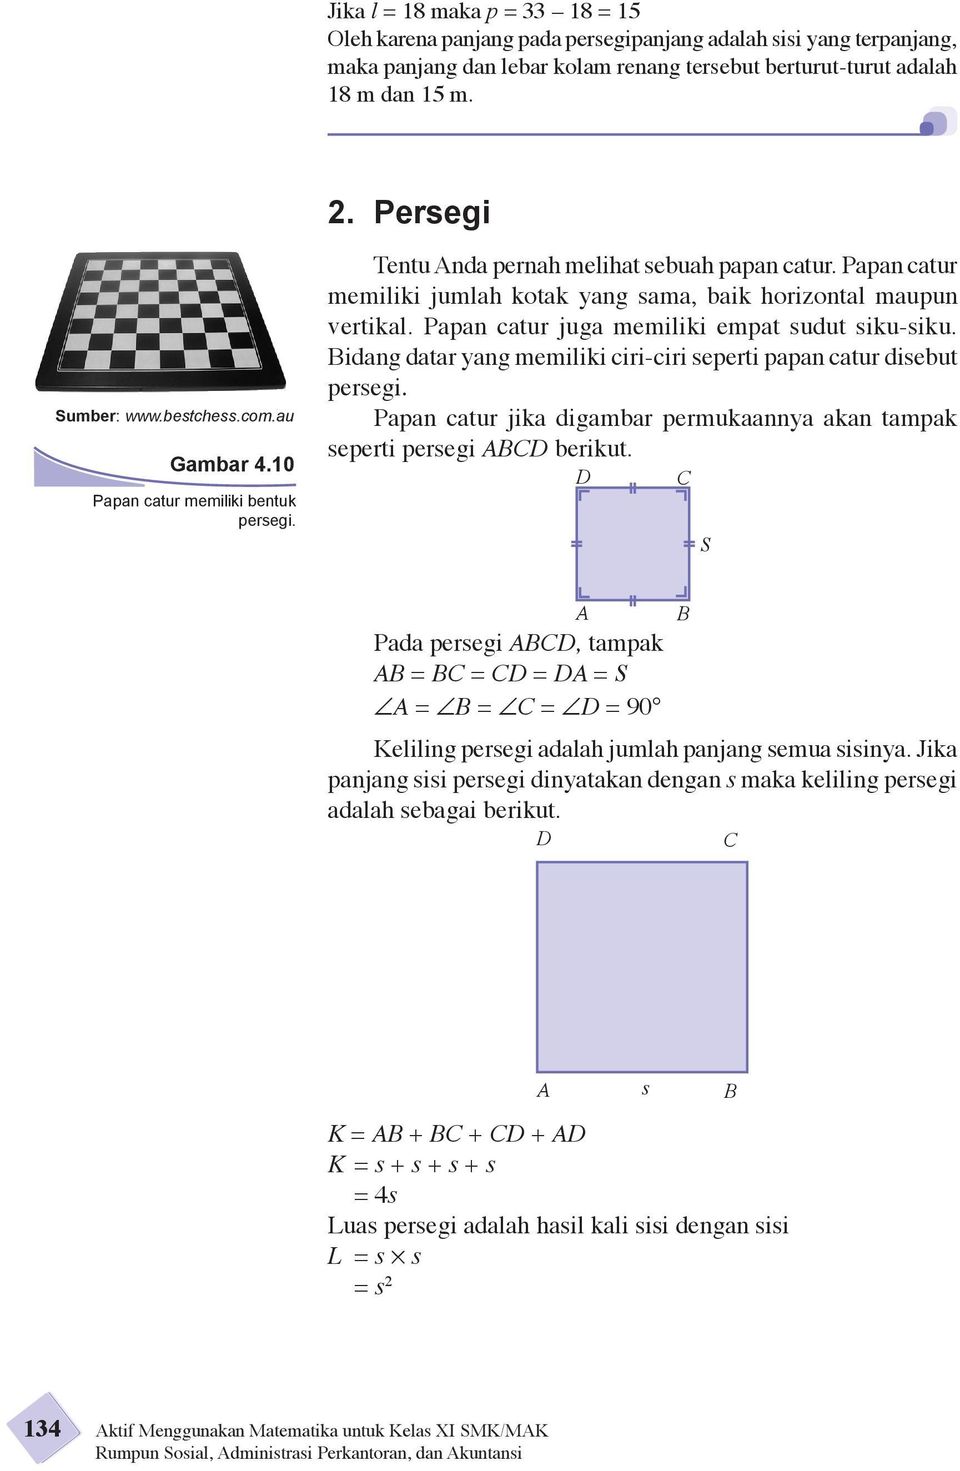 Papan catur memiliki jumlah kotak yang sama, baik horizontal maupun vertikal. Papan catur juga memiliki empat sudut siku-siku. idang datar yang memiliki ciri-ciri seperti papan catur disebut persegi.